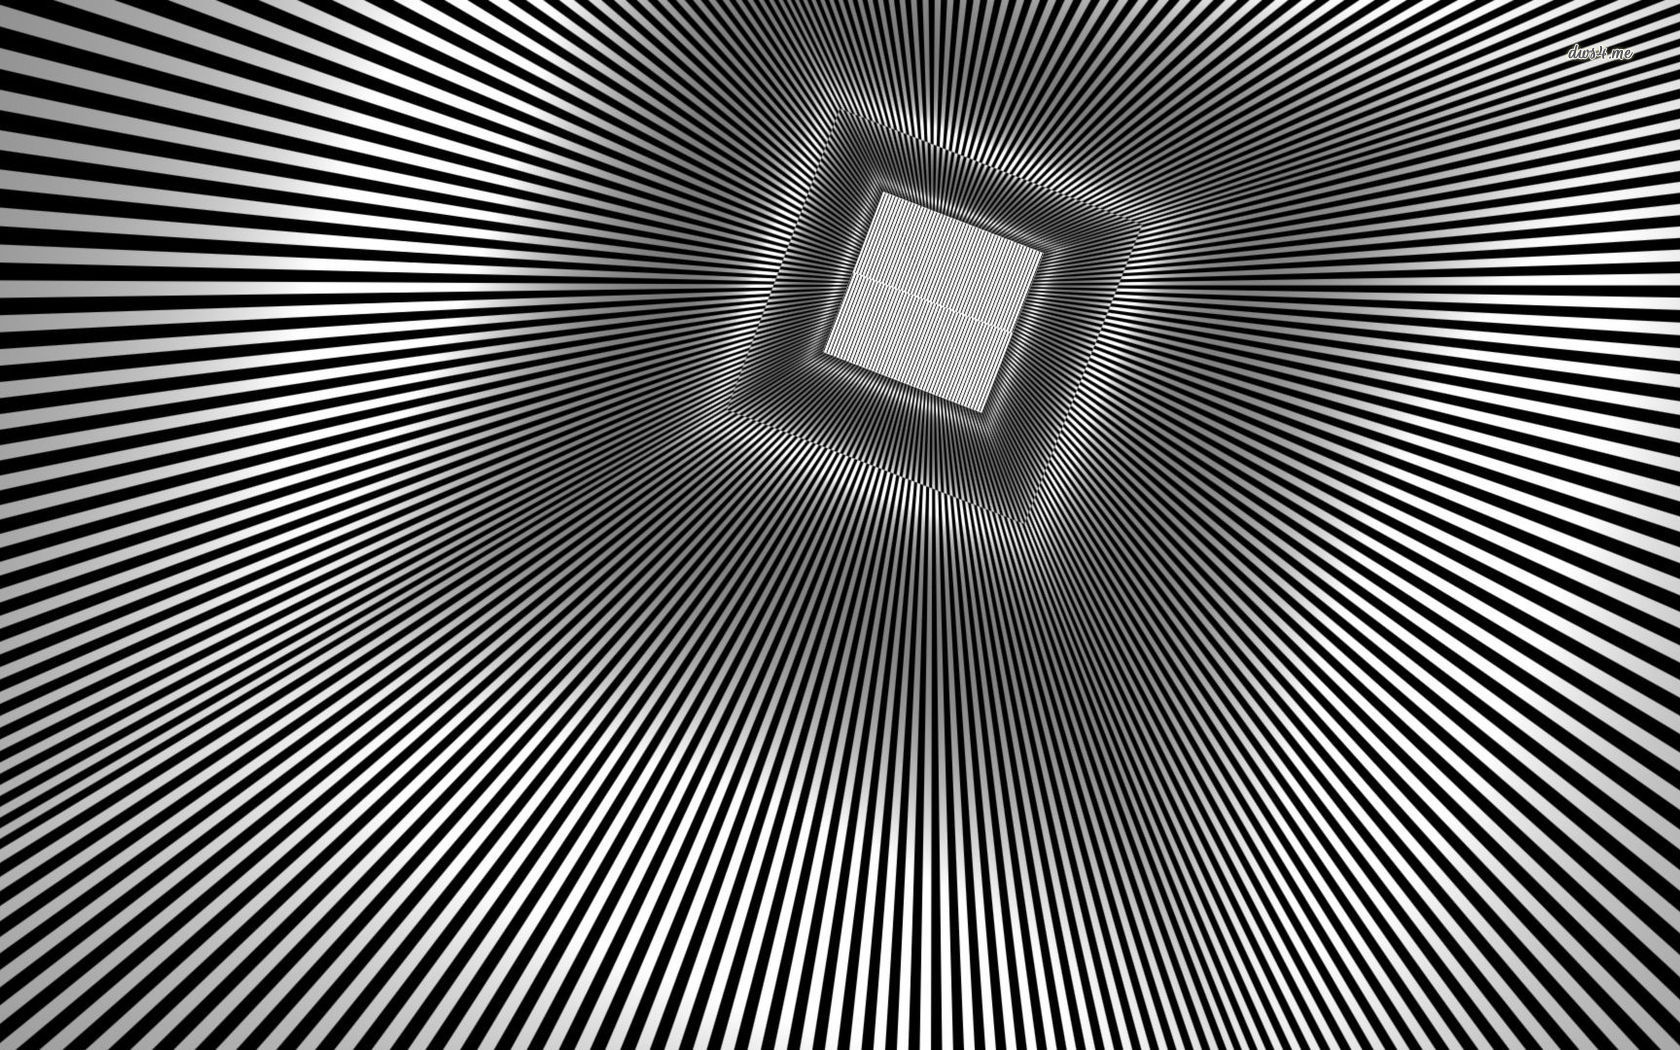 Illusion Wallpaper Optical More